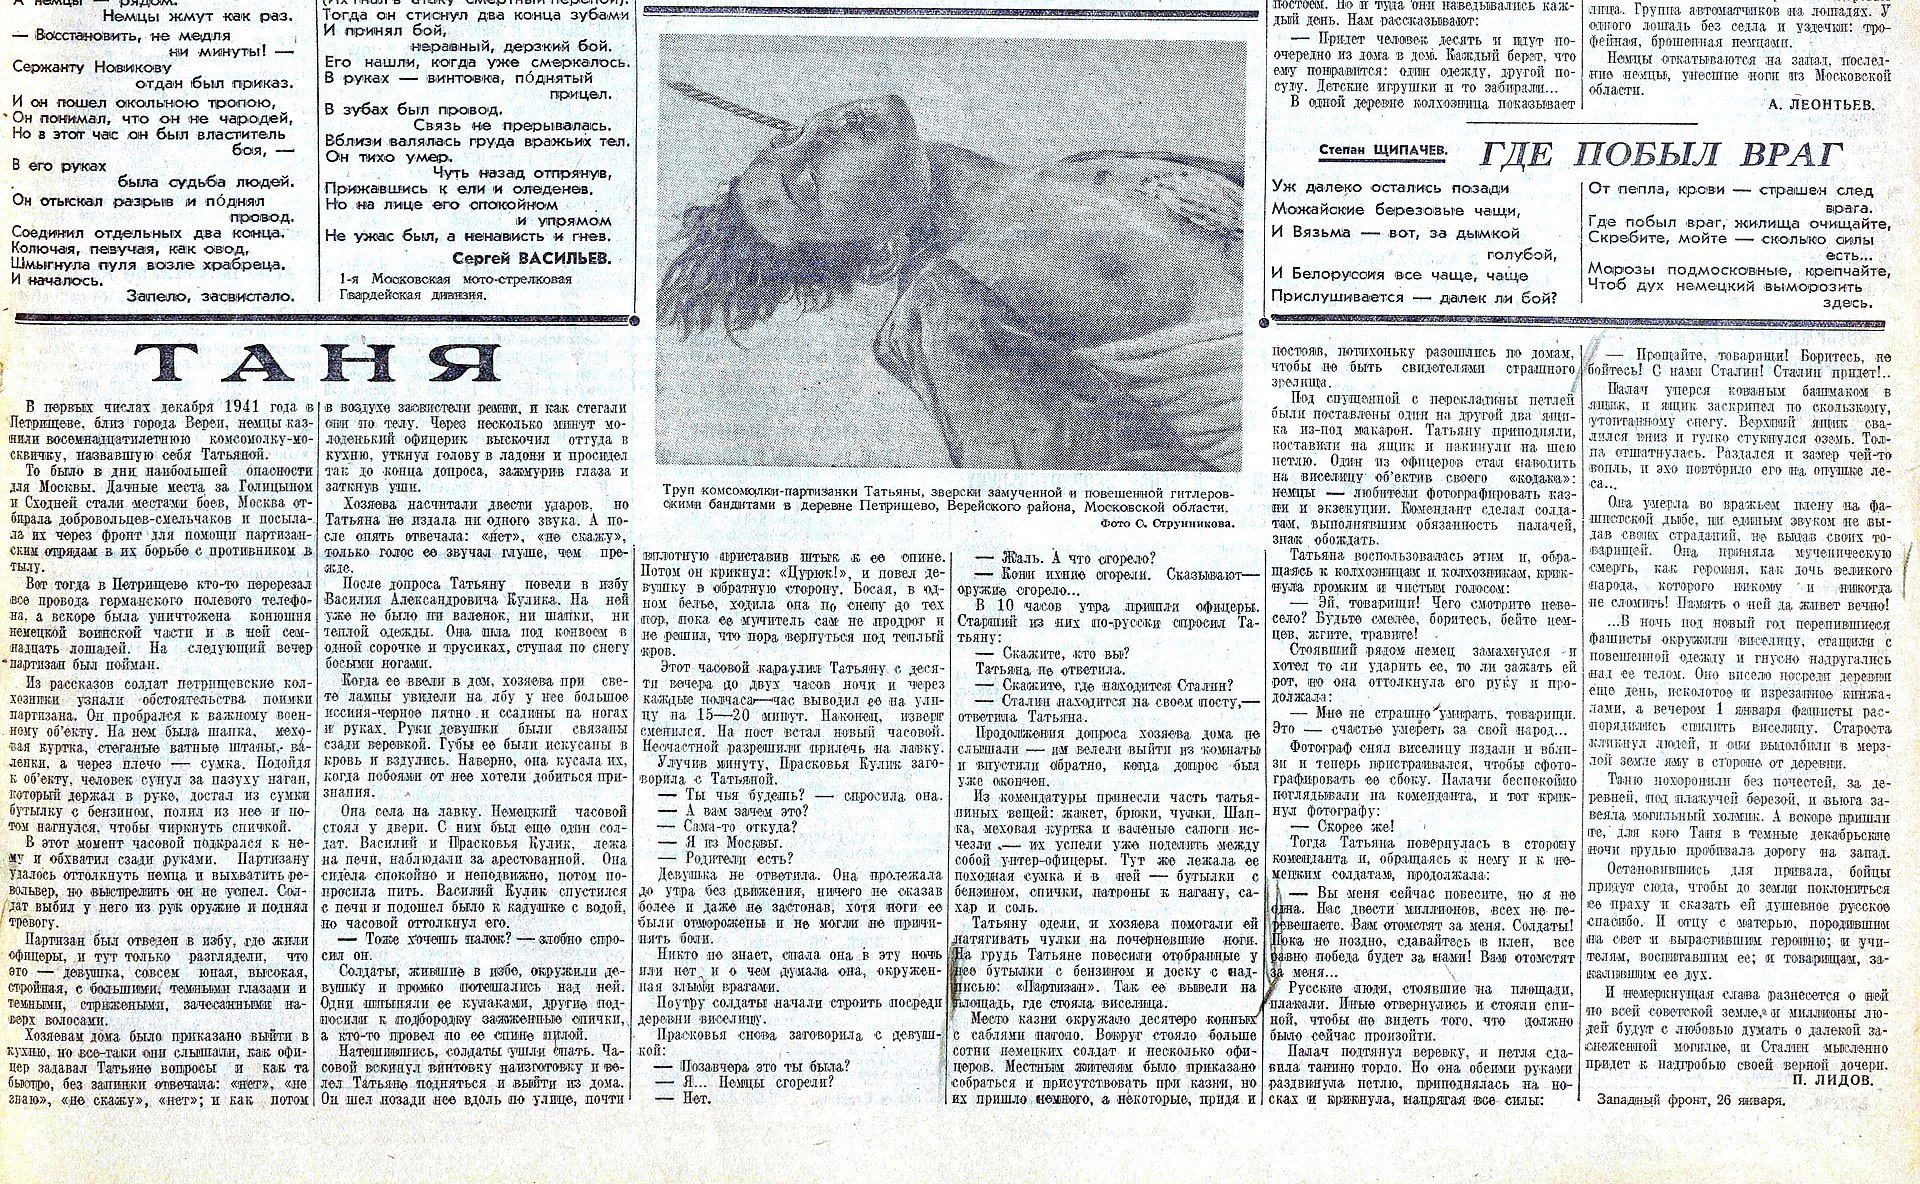 Очерк Петра Лидова «Таня», газета «Правда», 27 января 1942 года, фото Сергея Струнникова.